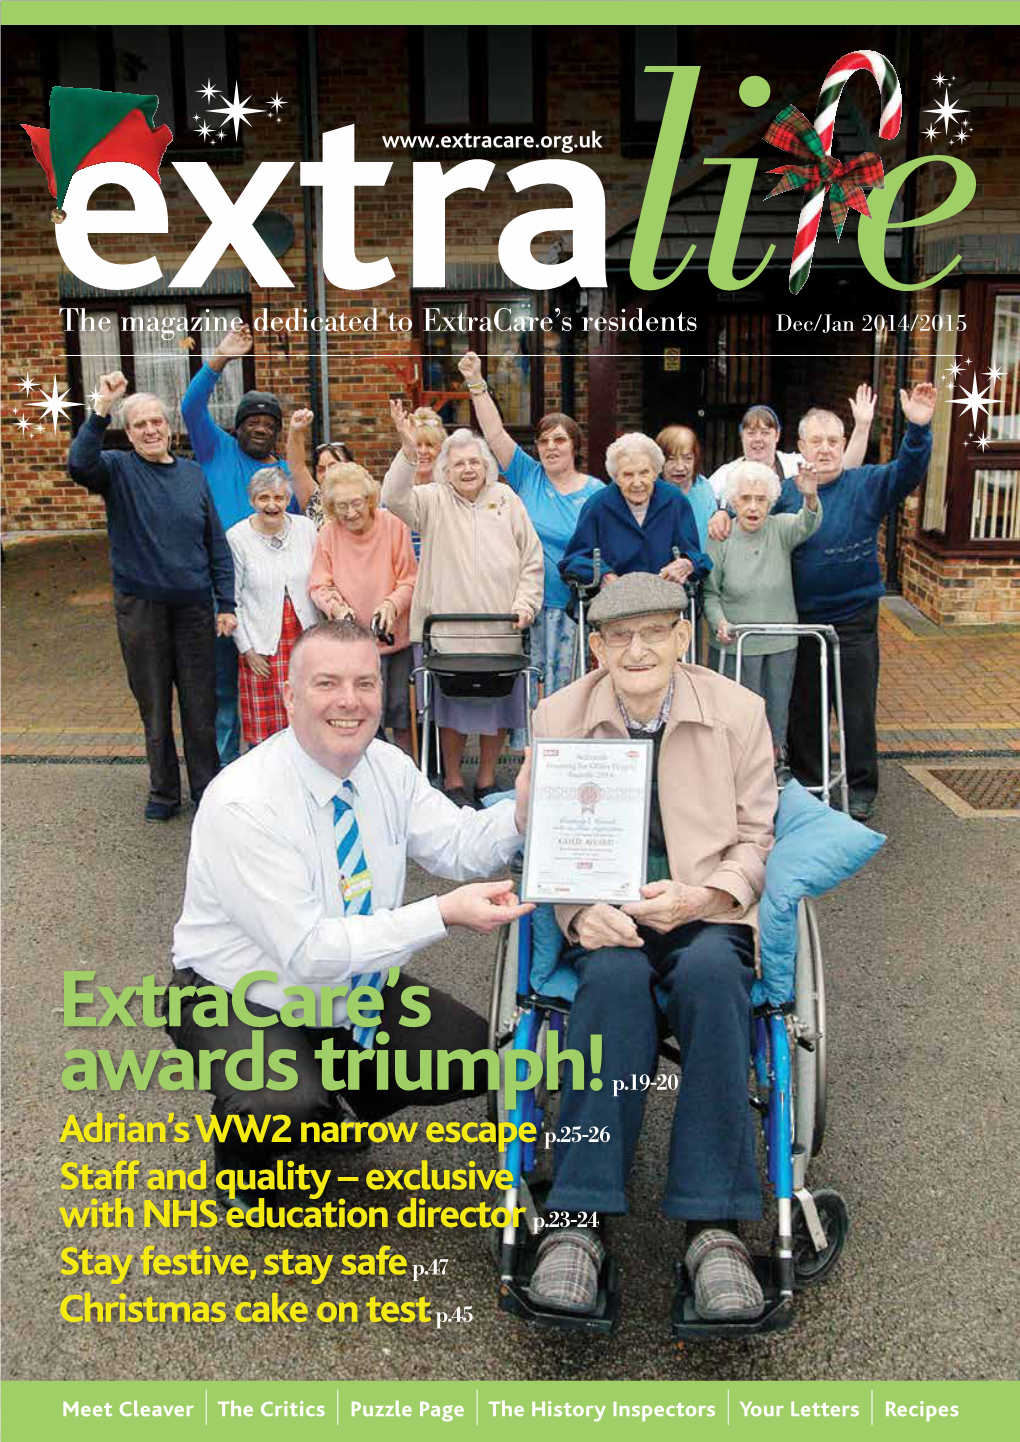 Extracare's Awards Triumph!